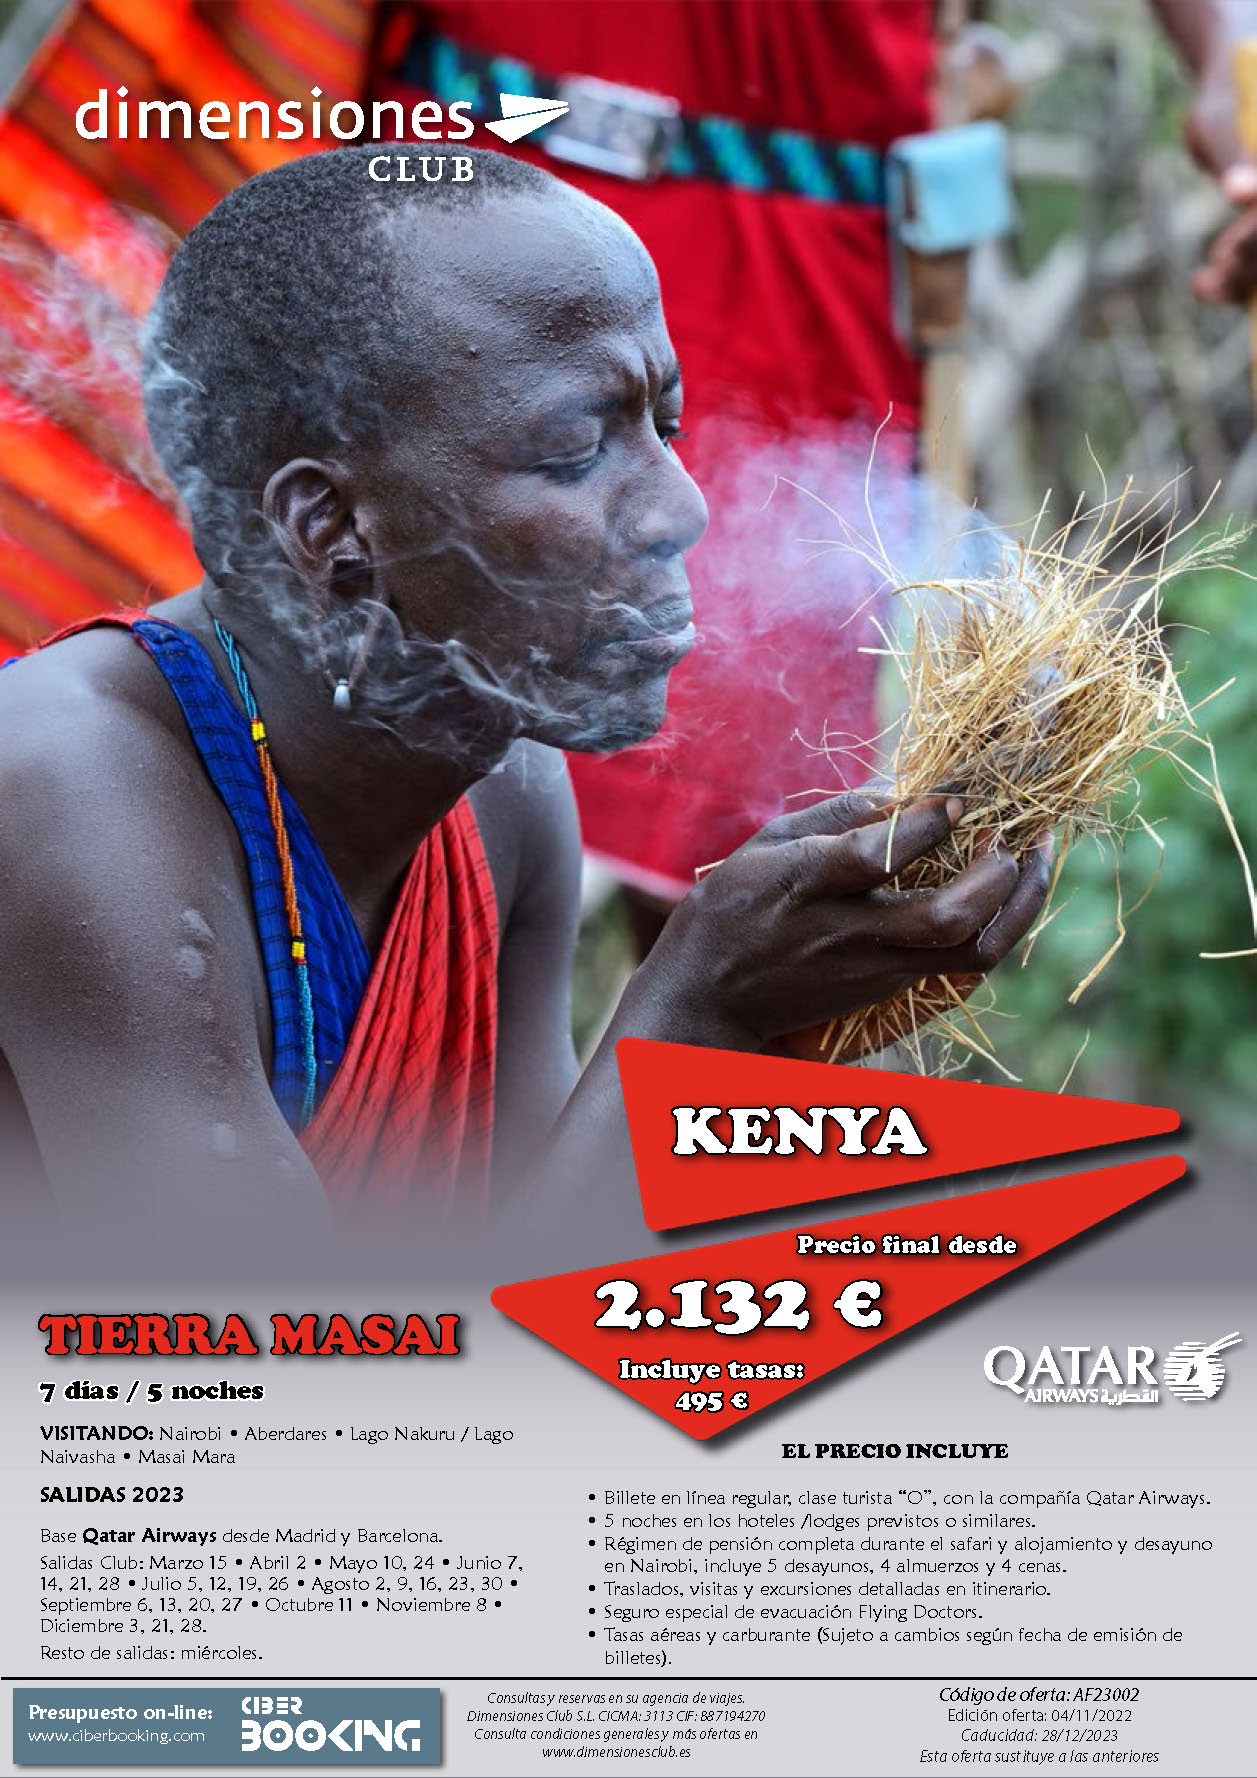 Oferta Dimensiones Club Kenia Tierra Masai 2023 7 dias salidas desde Madrid y Barcelona vuelos Qatar Airways